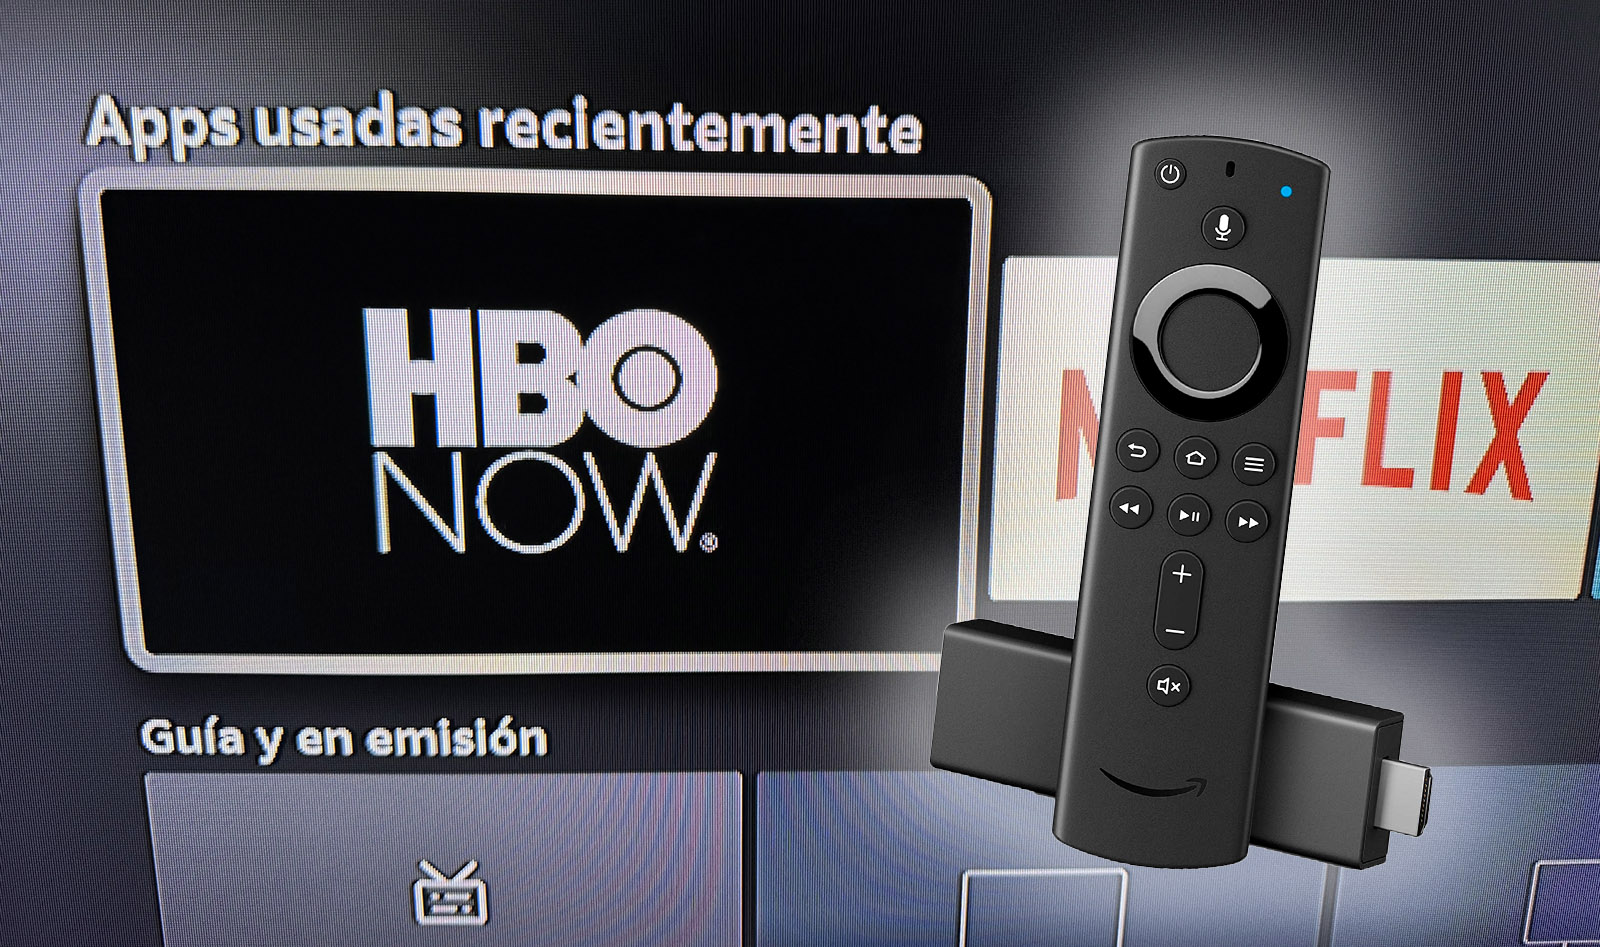 Instala HBO en tu Fire Stick de Amazon